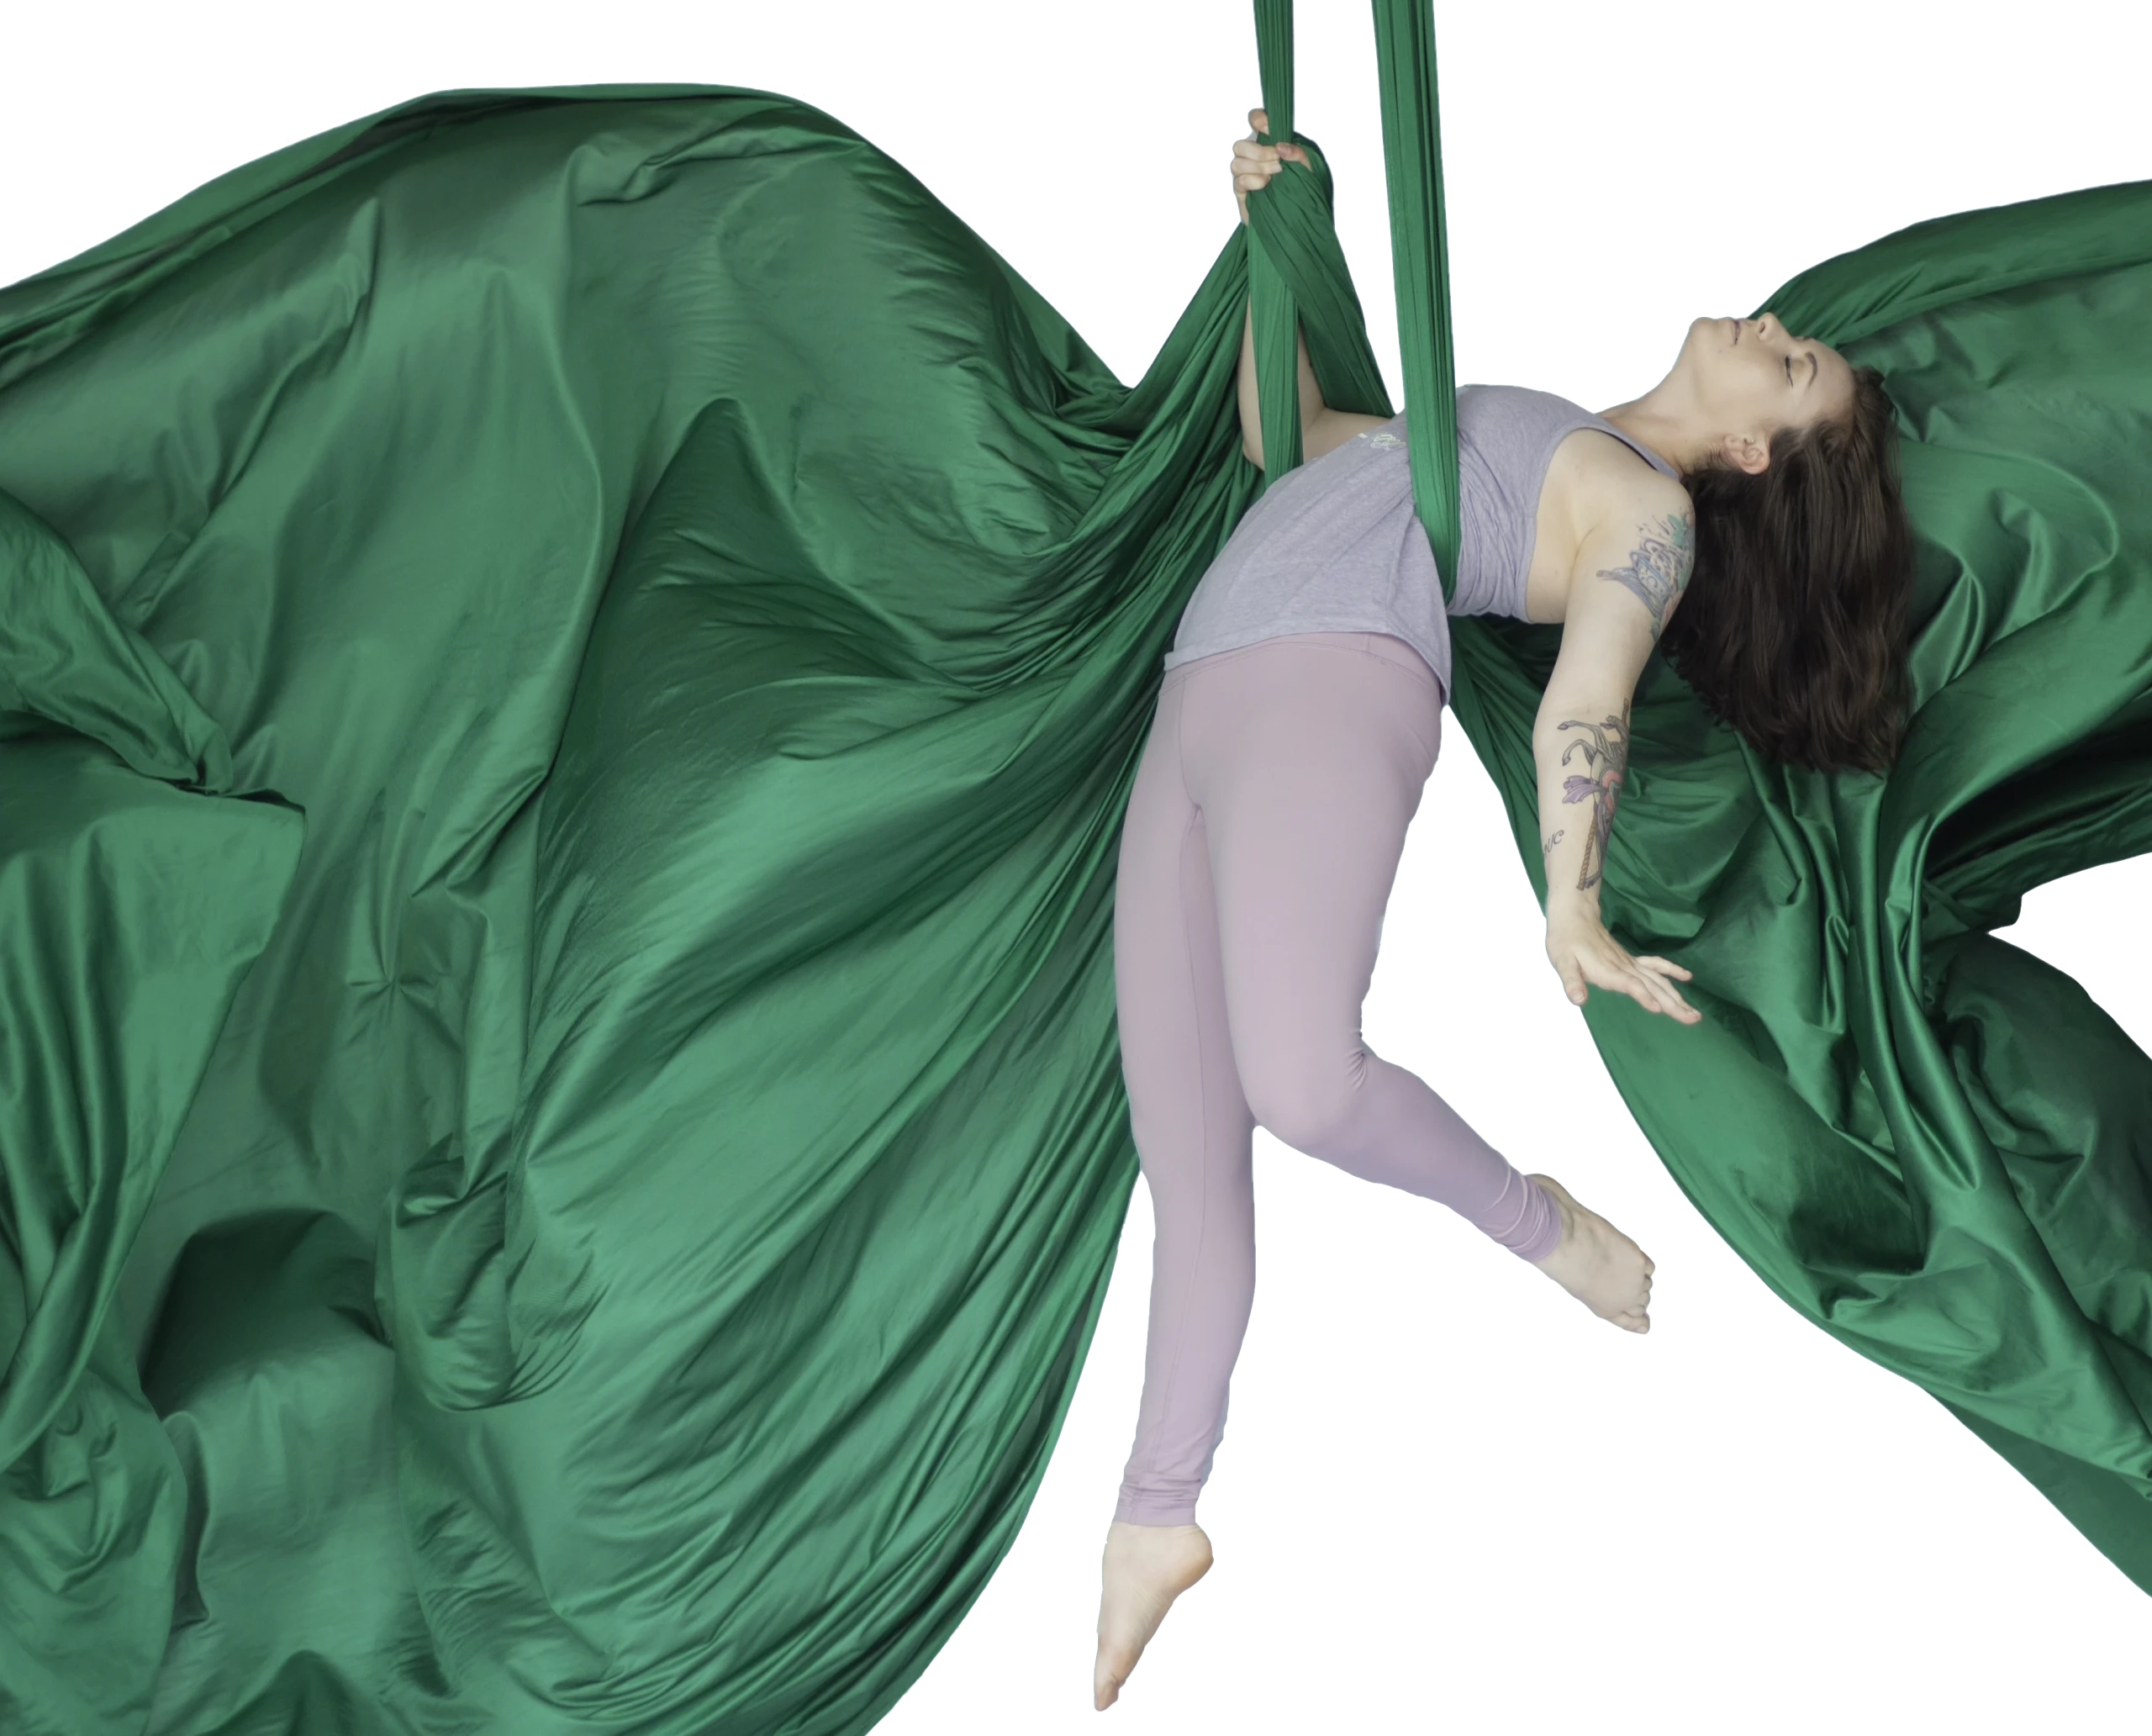 aerialist floating on green aerial silks